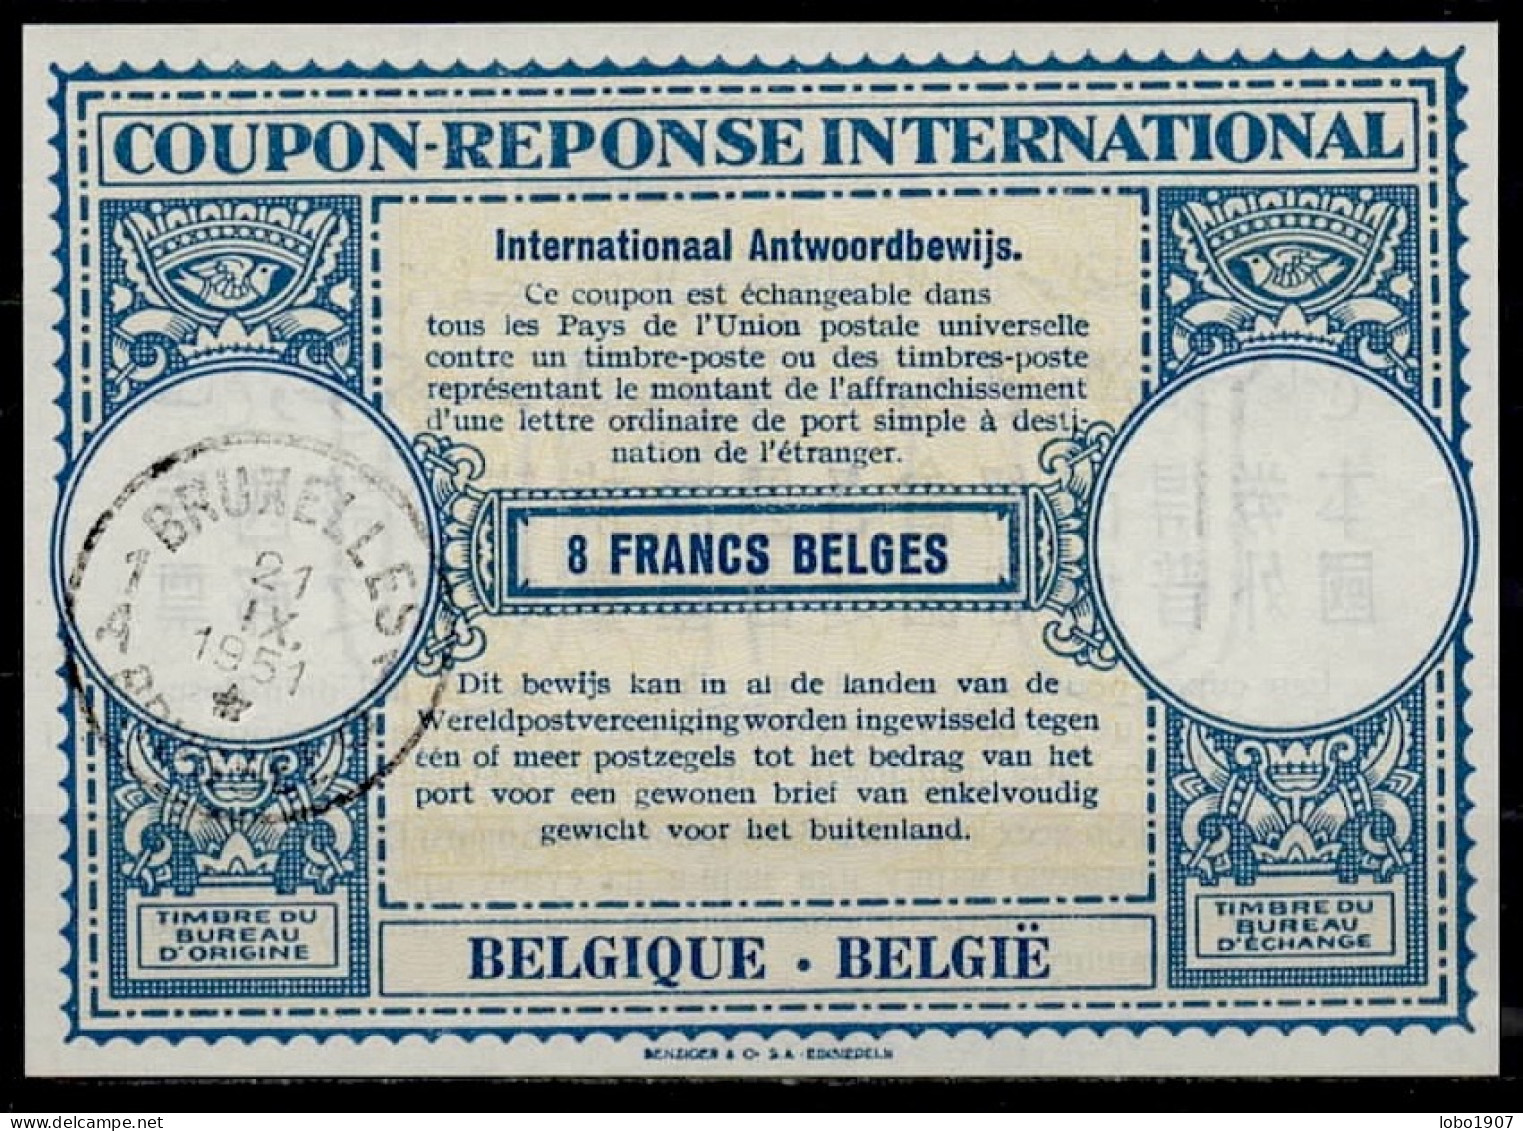 BELGIQUE BELGIE BELGIUM 1951, Lo15  8 FRANCS BELGES International Reply Coupon Reponse Antwortschein IAS IRC  O BRUXELLE - Coupons-réponse Internationaux